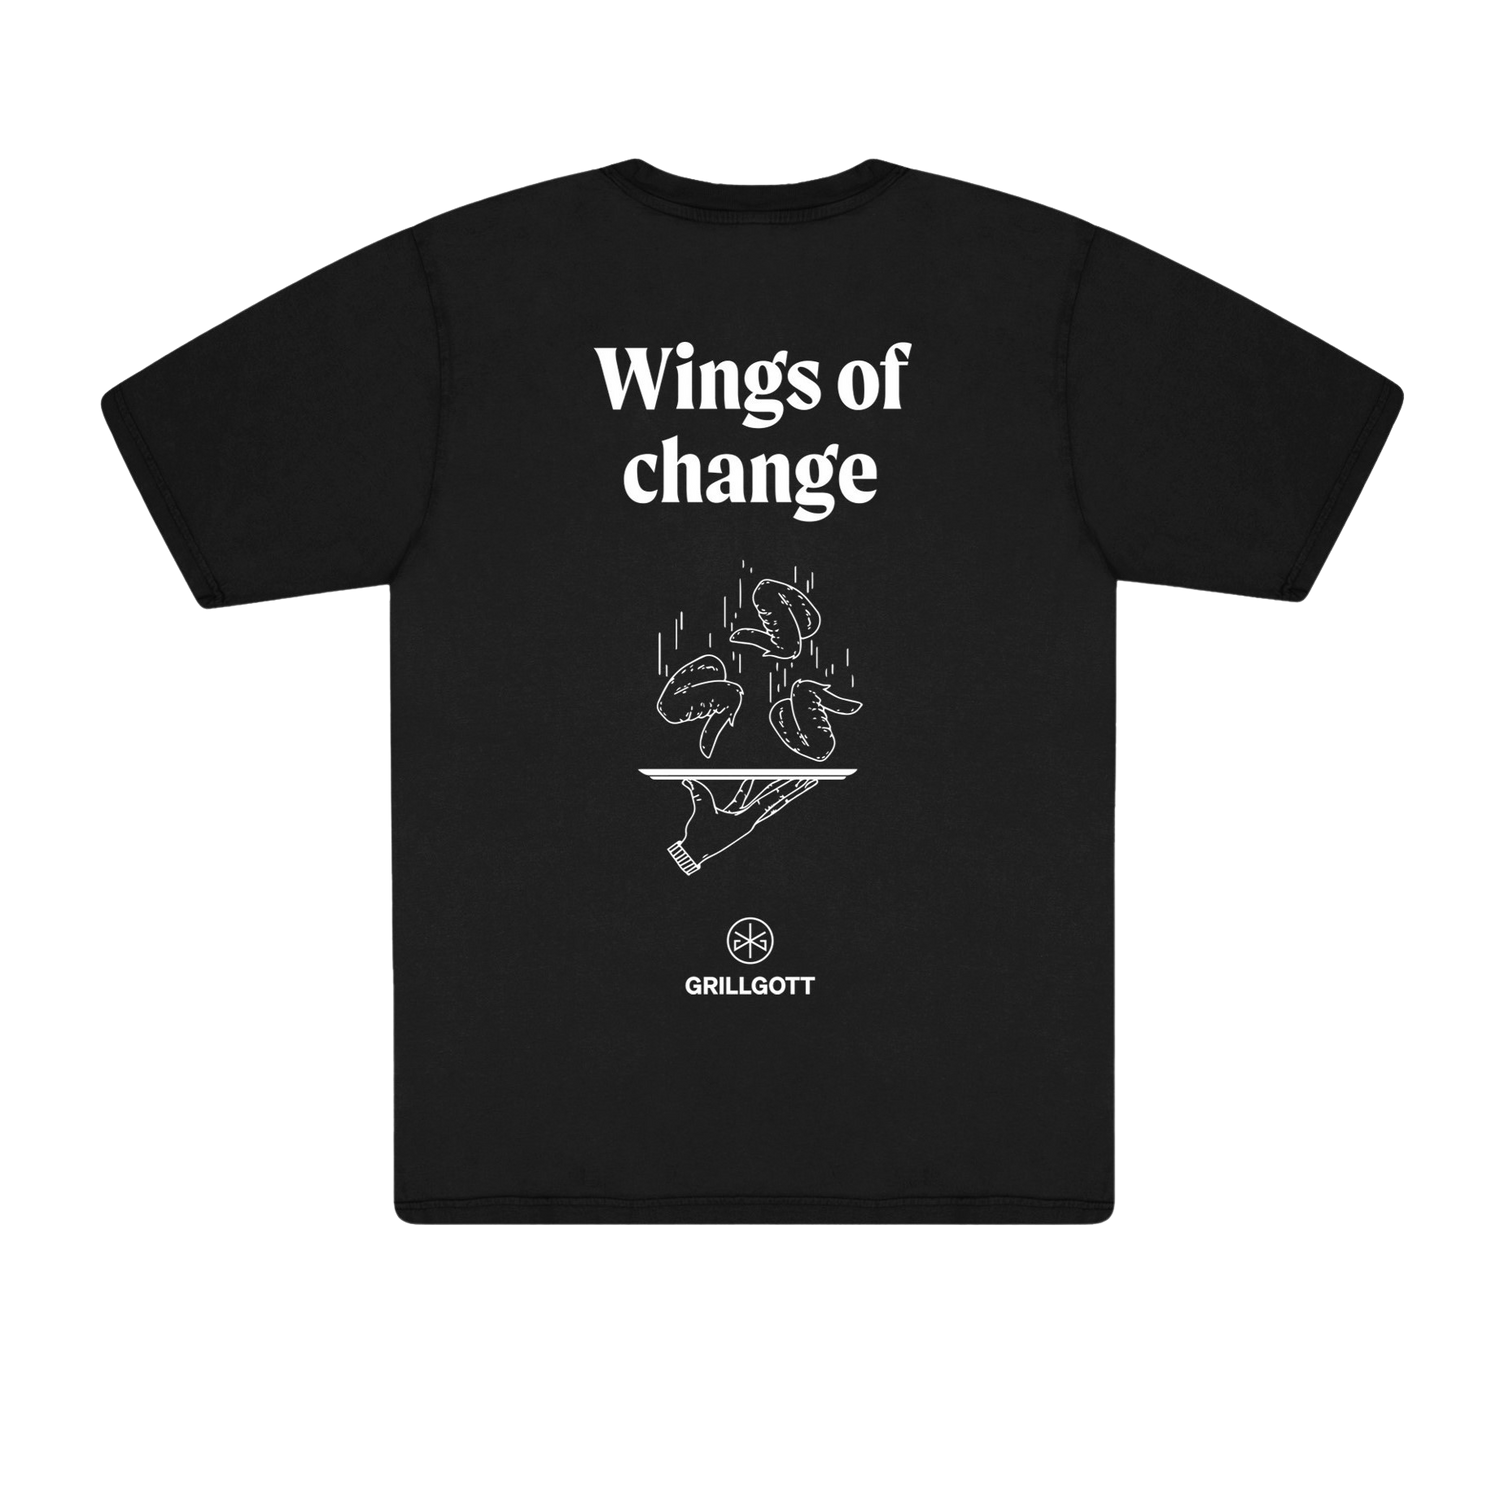 Grillgott T-Shirt M "Wings of change"